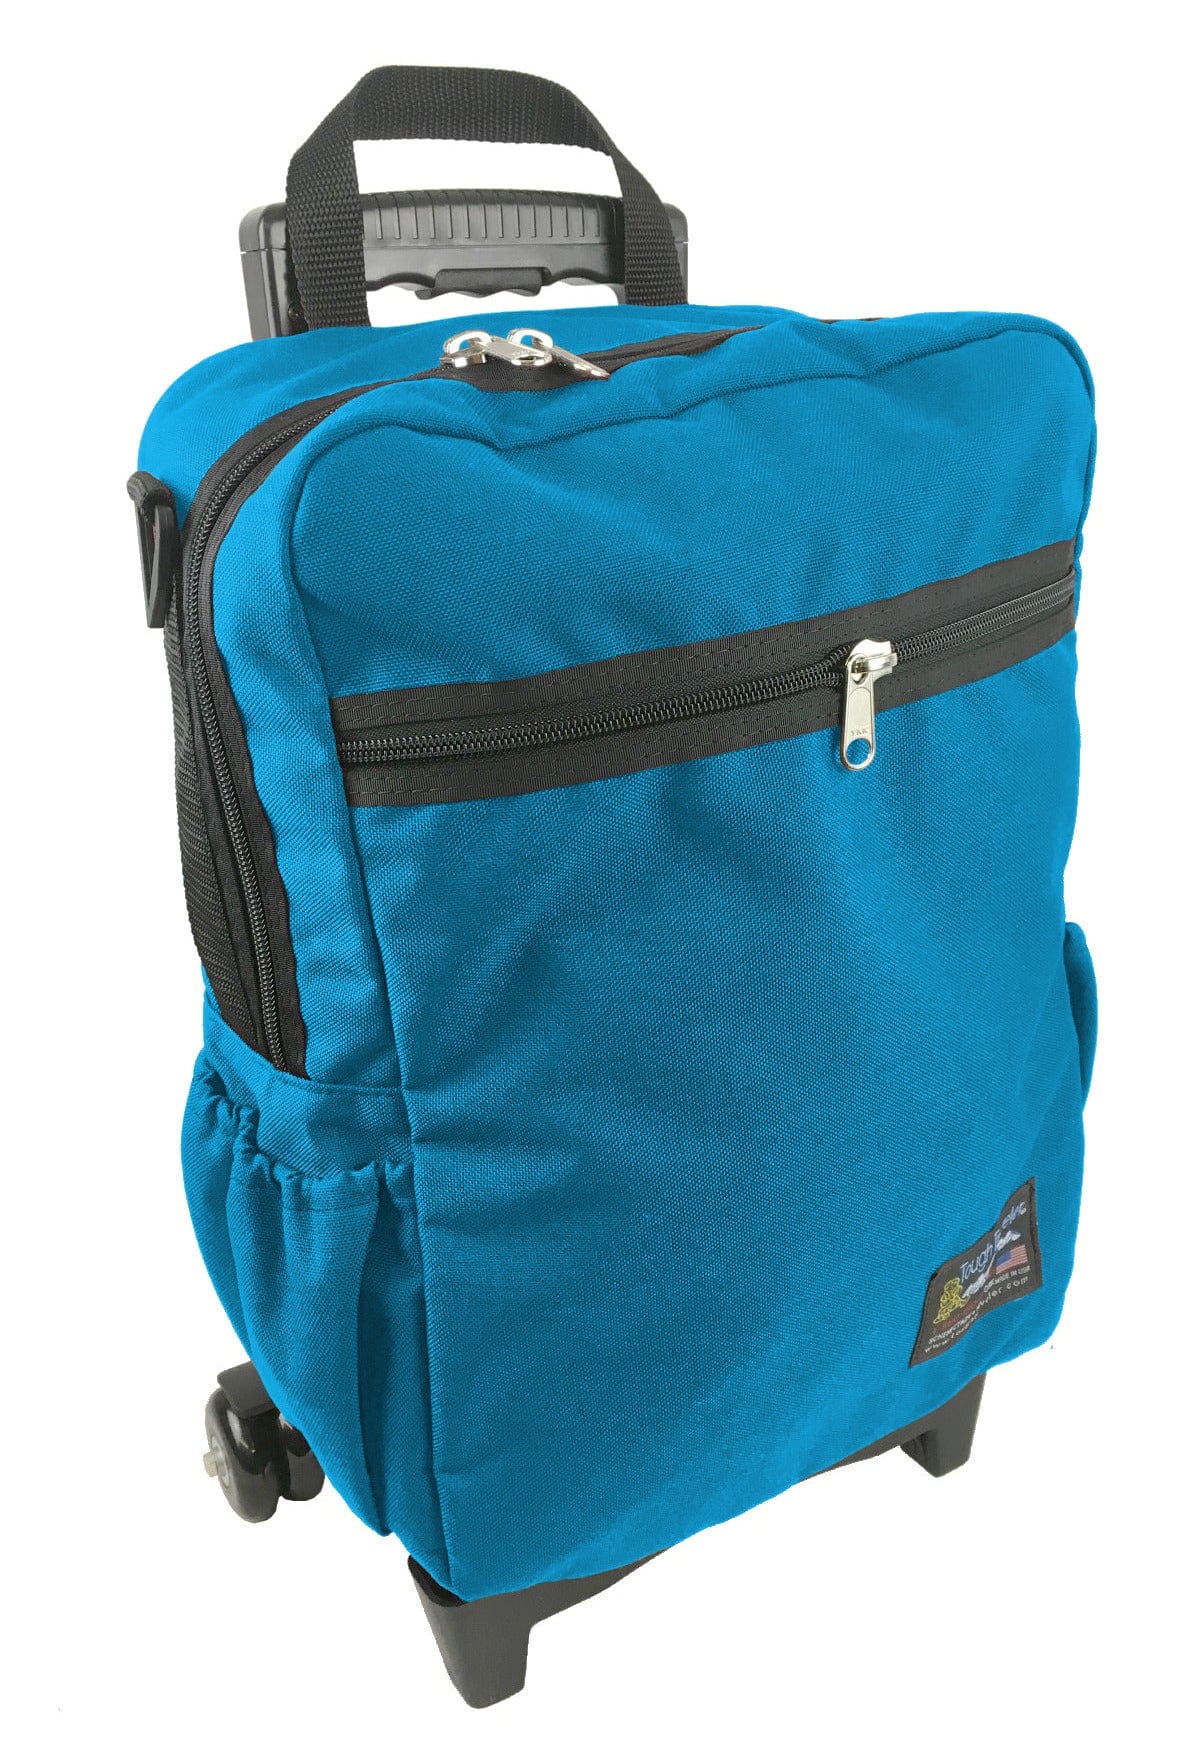 17-inch Trendy Fashion Pattern Travel Single Shoulder Bag, Sports Gym Luggage Bag, Moving Bag, Airplane Bag, for Boys, Girls, Kids, Student, Outdoor